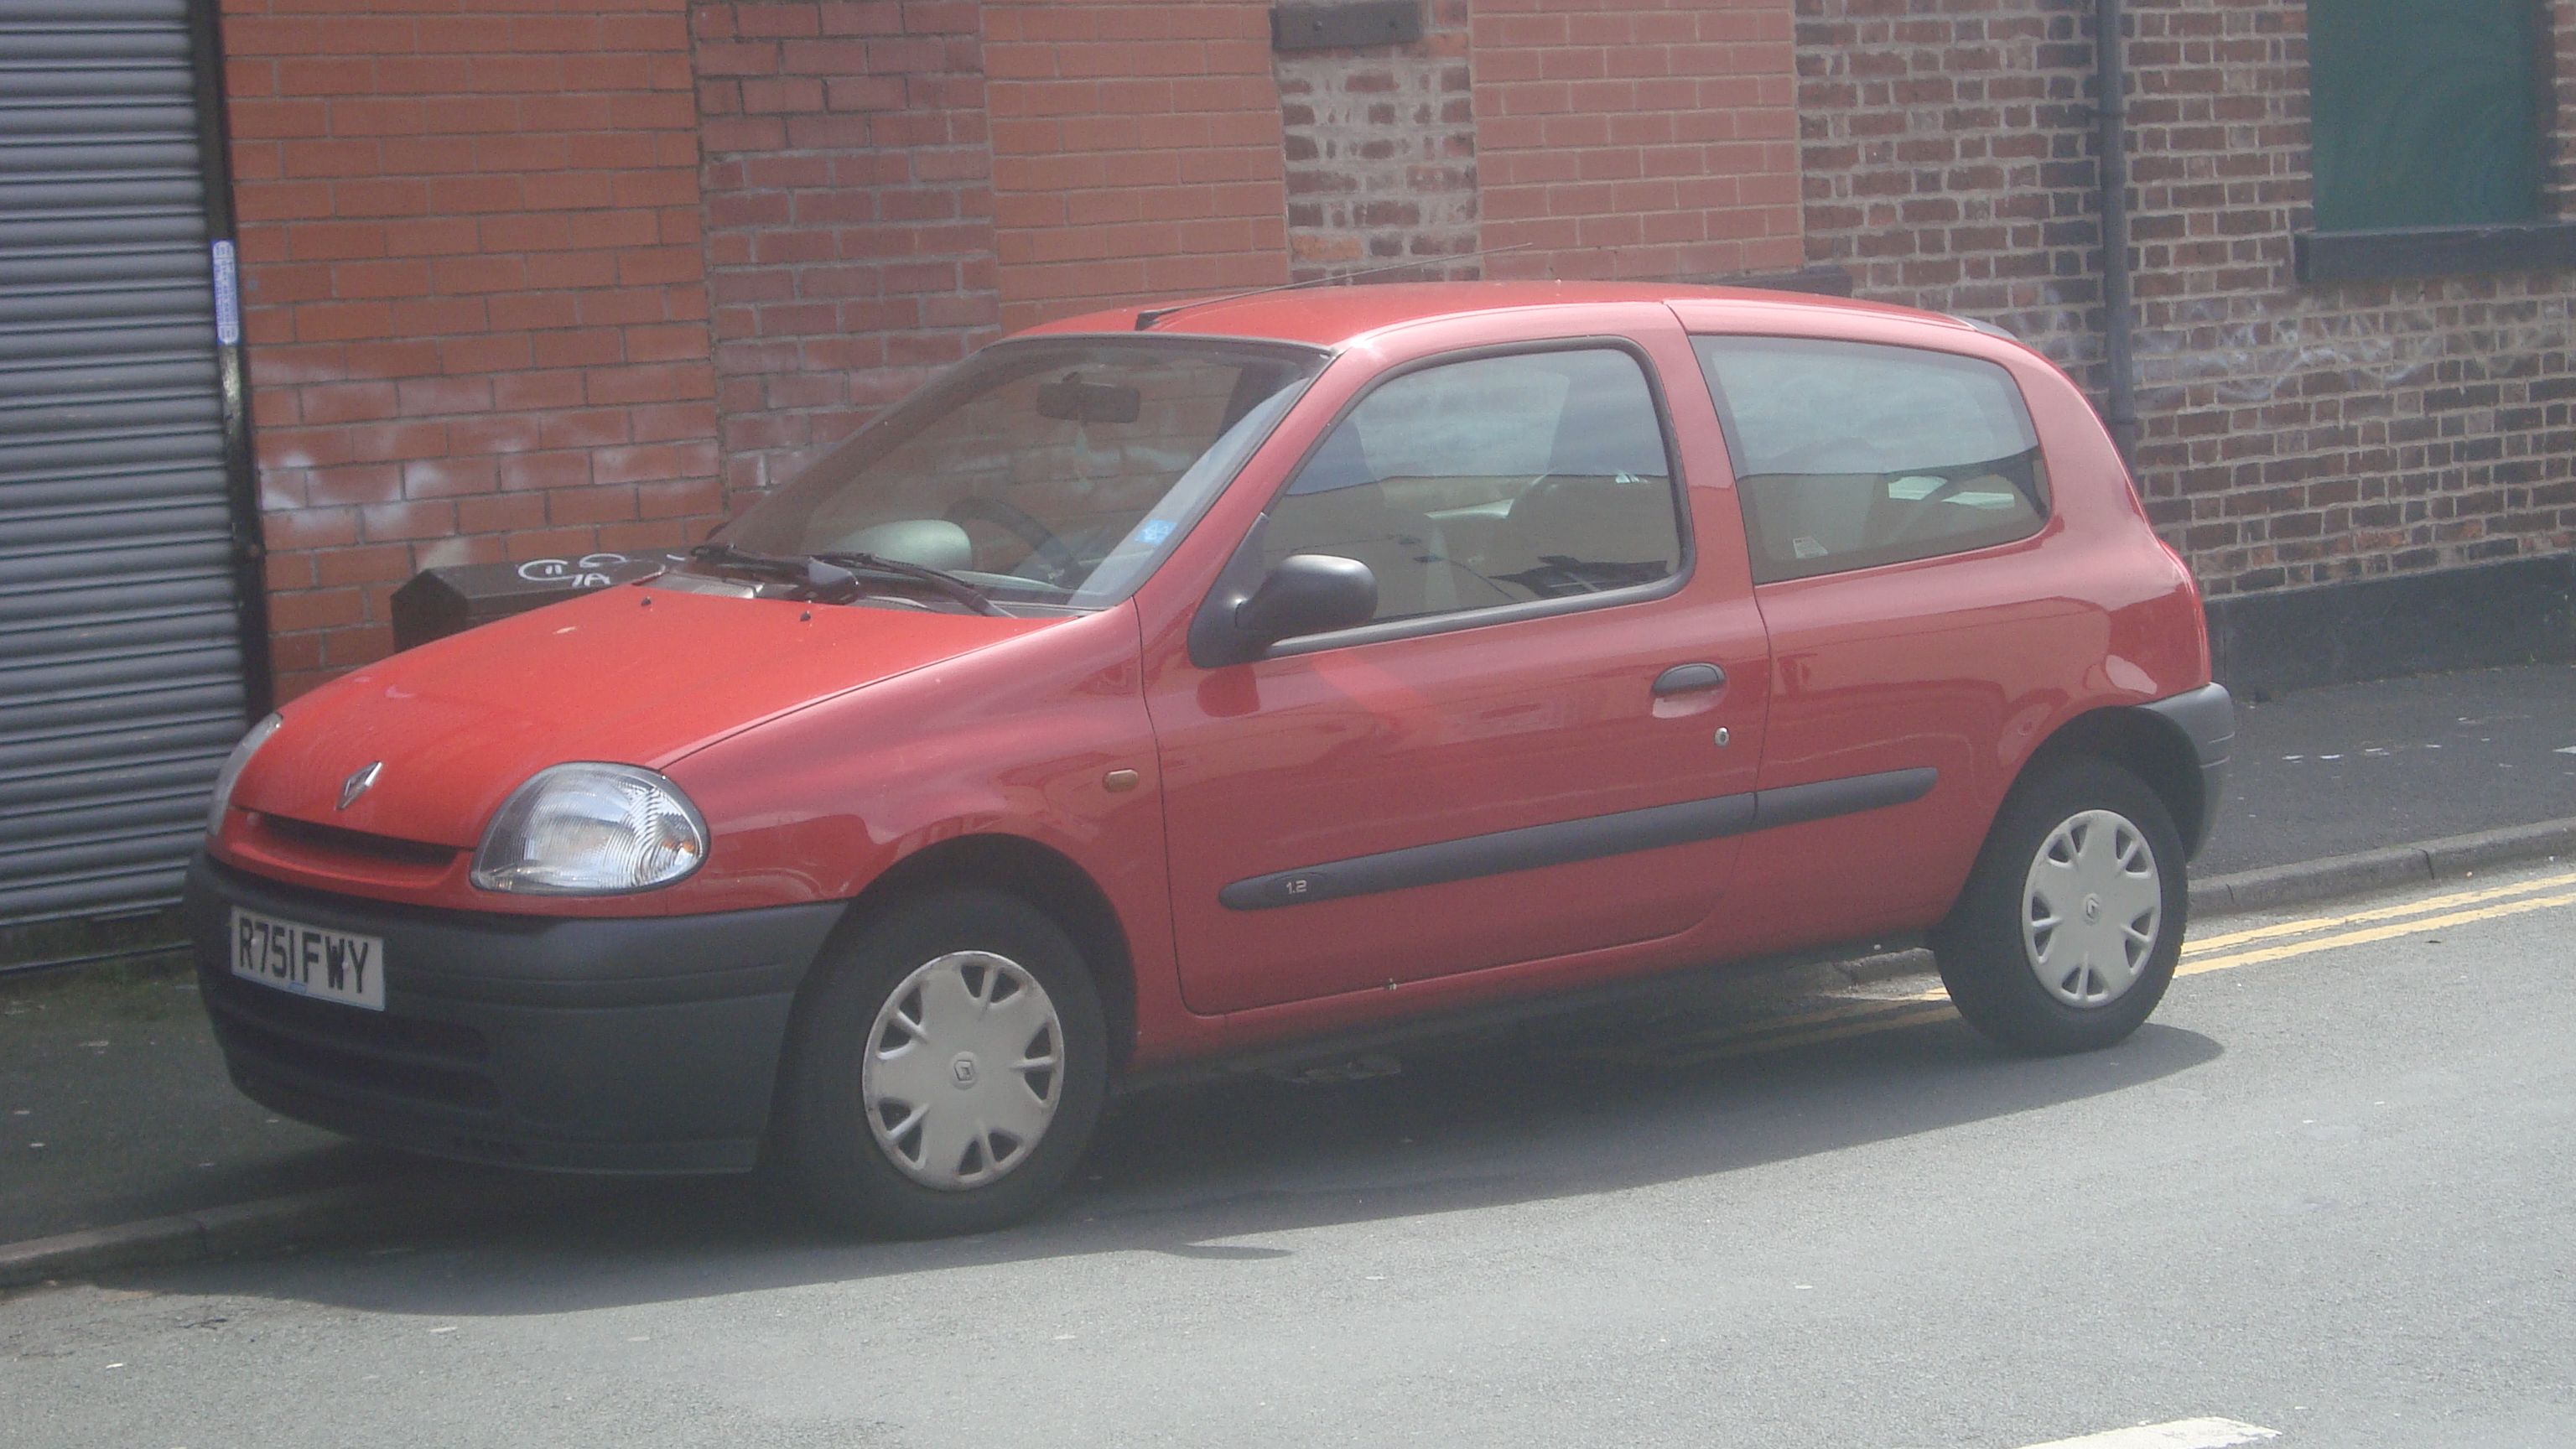 Absurd Ijsbeer Spit File:1998 Renault Clio 1.2 (28237018364).jpg - Wikimedia Commons